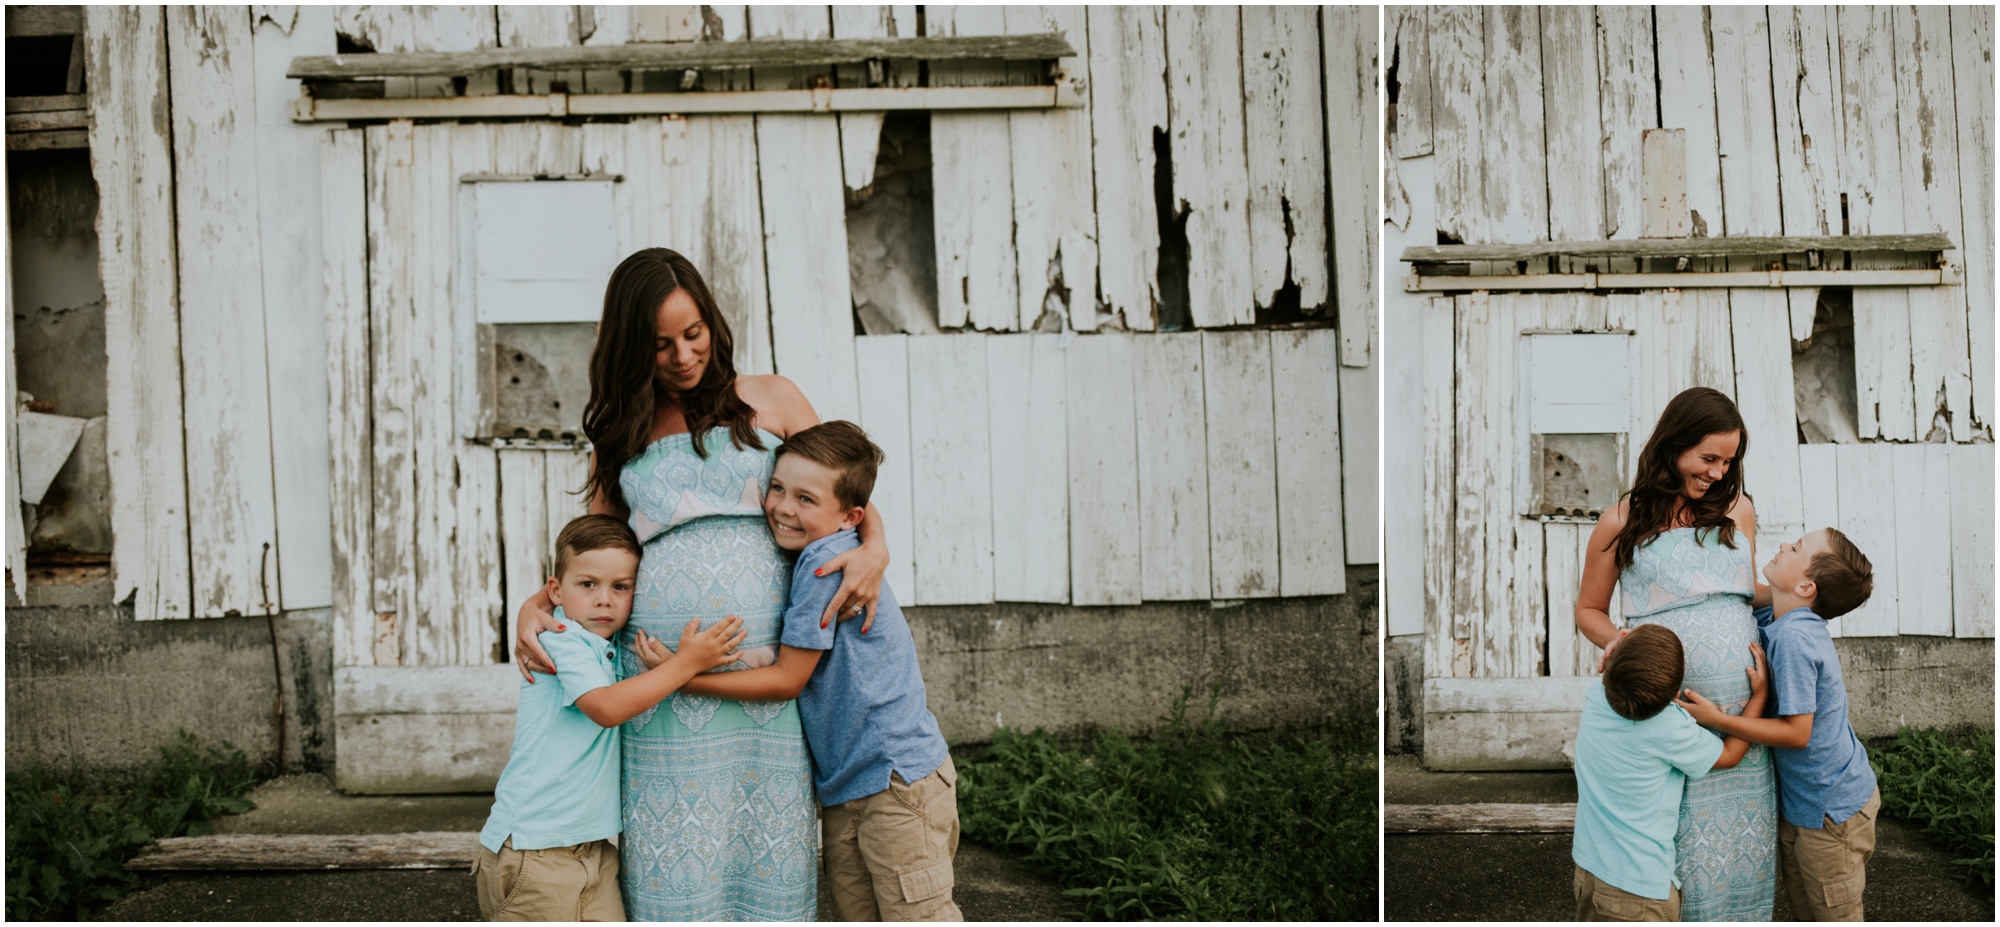 Family Maternity Session | Lifestyle Family Photography | Brittany VanRuymbeke Photos + Films